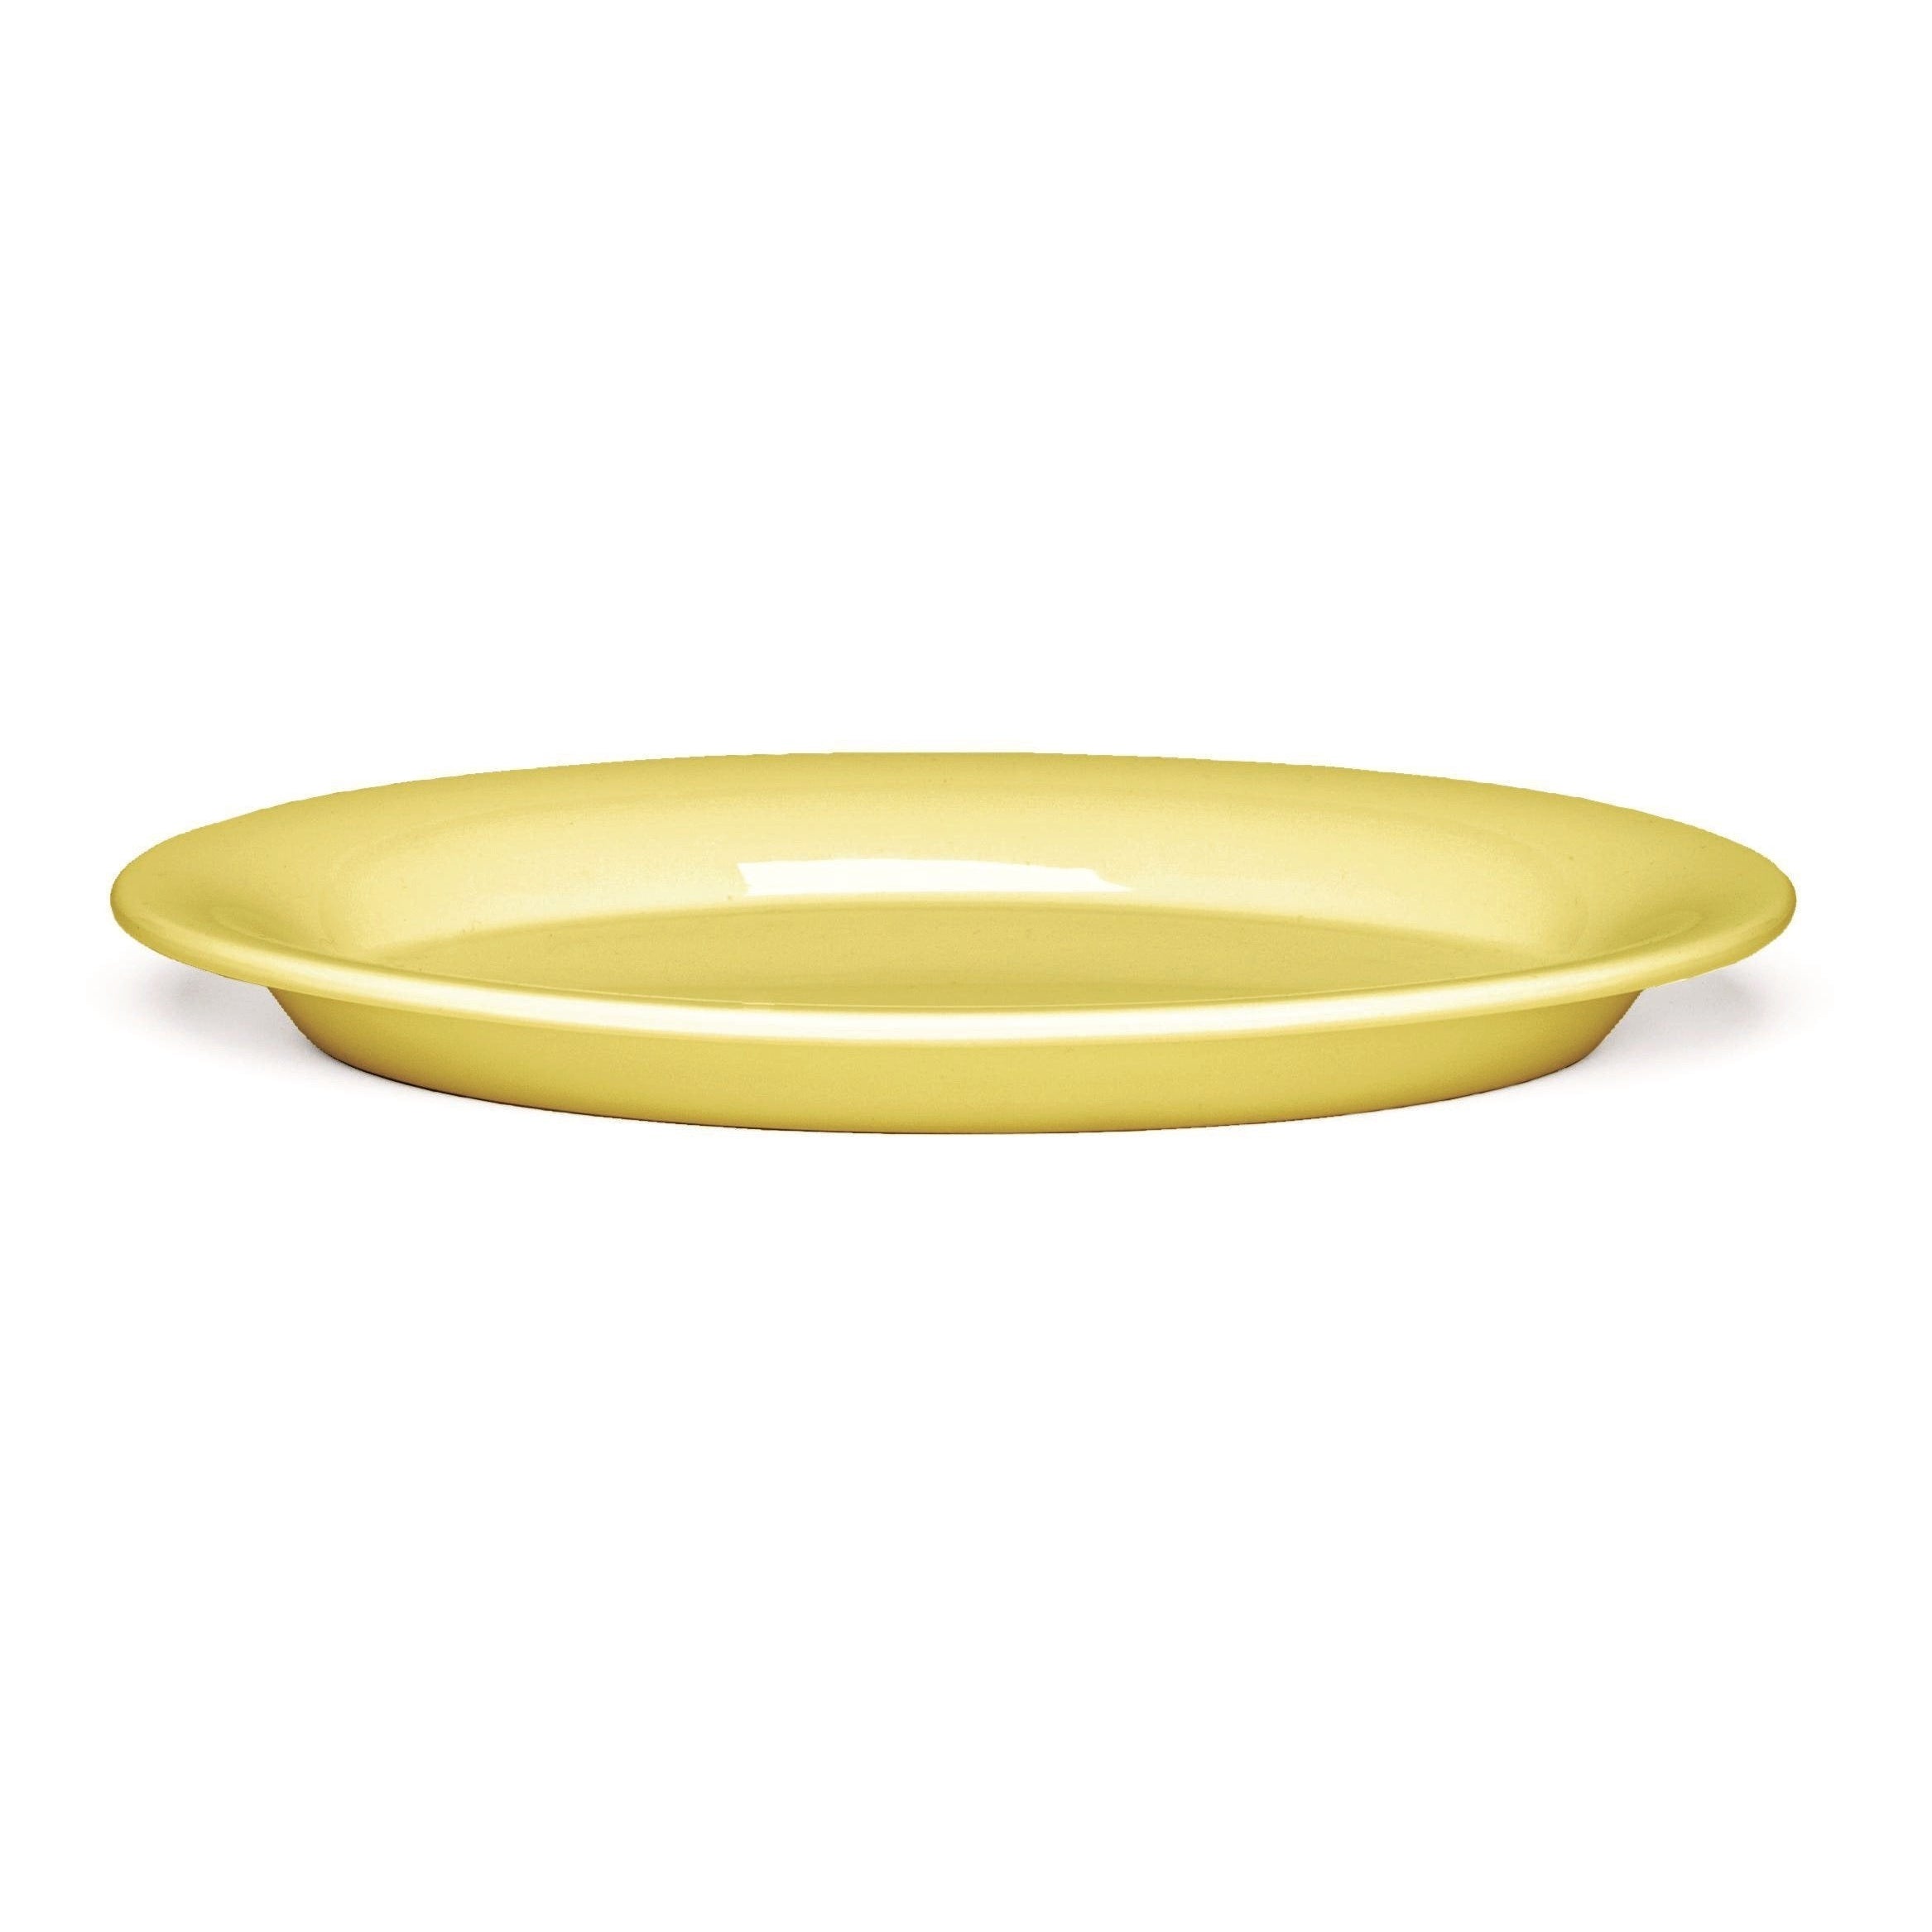 Kähler ursula plaat geel, Ø28 cm